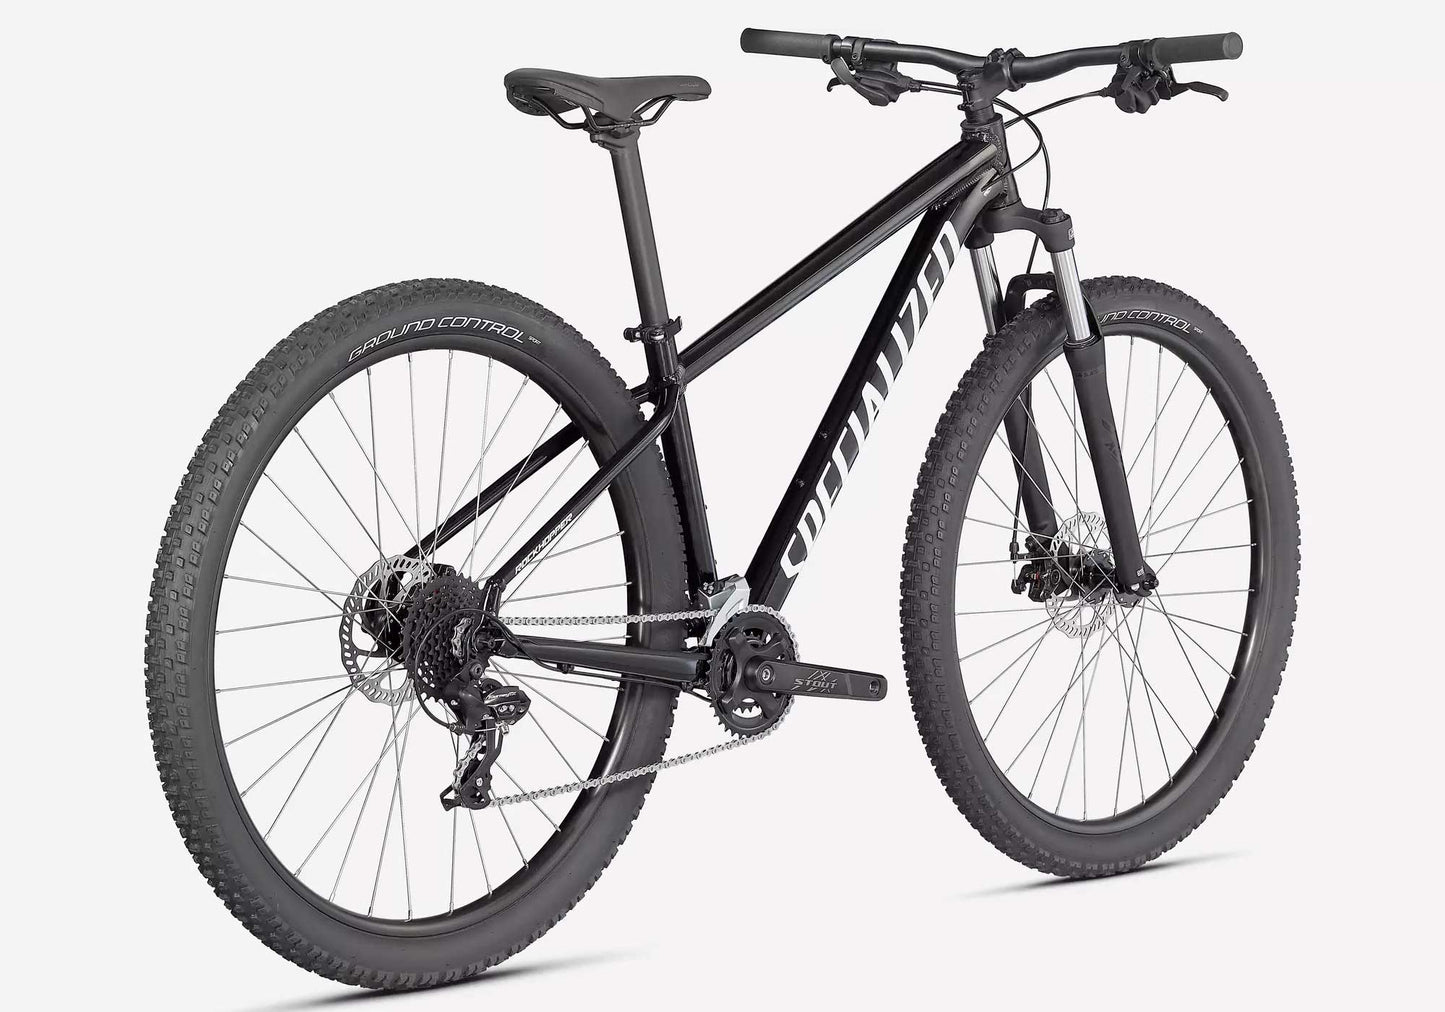 ON SALE! Specialized Rockhopper 26 Unisex Mountain Bike - Gloss Tarmac Black